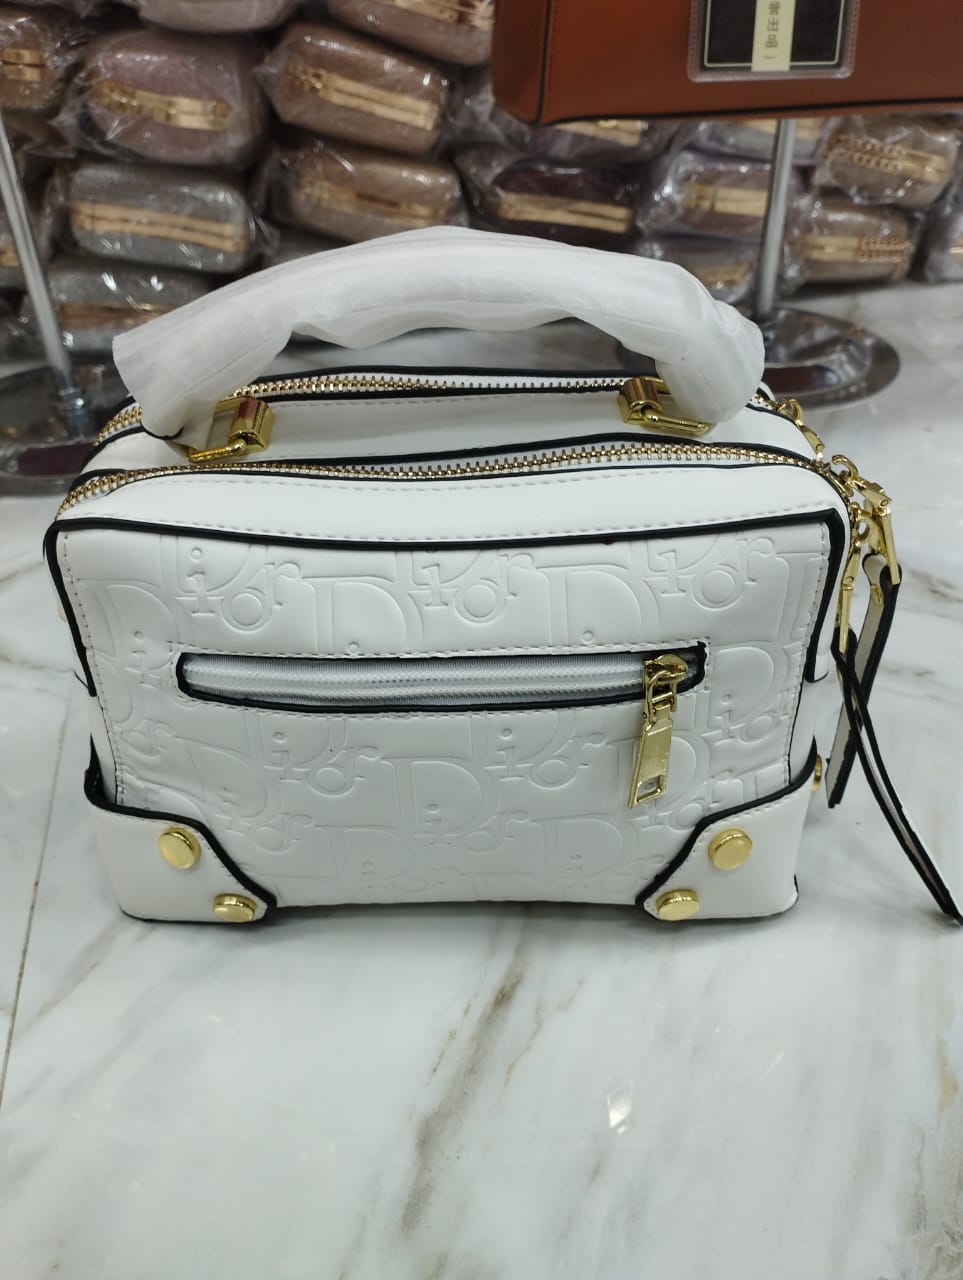 Branded Gucci handbag in Pakistan